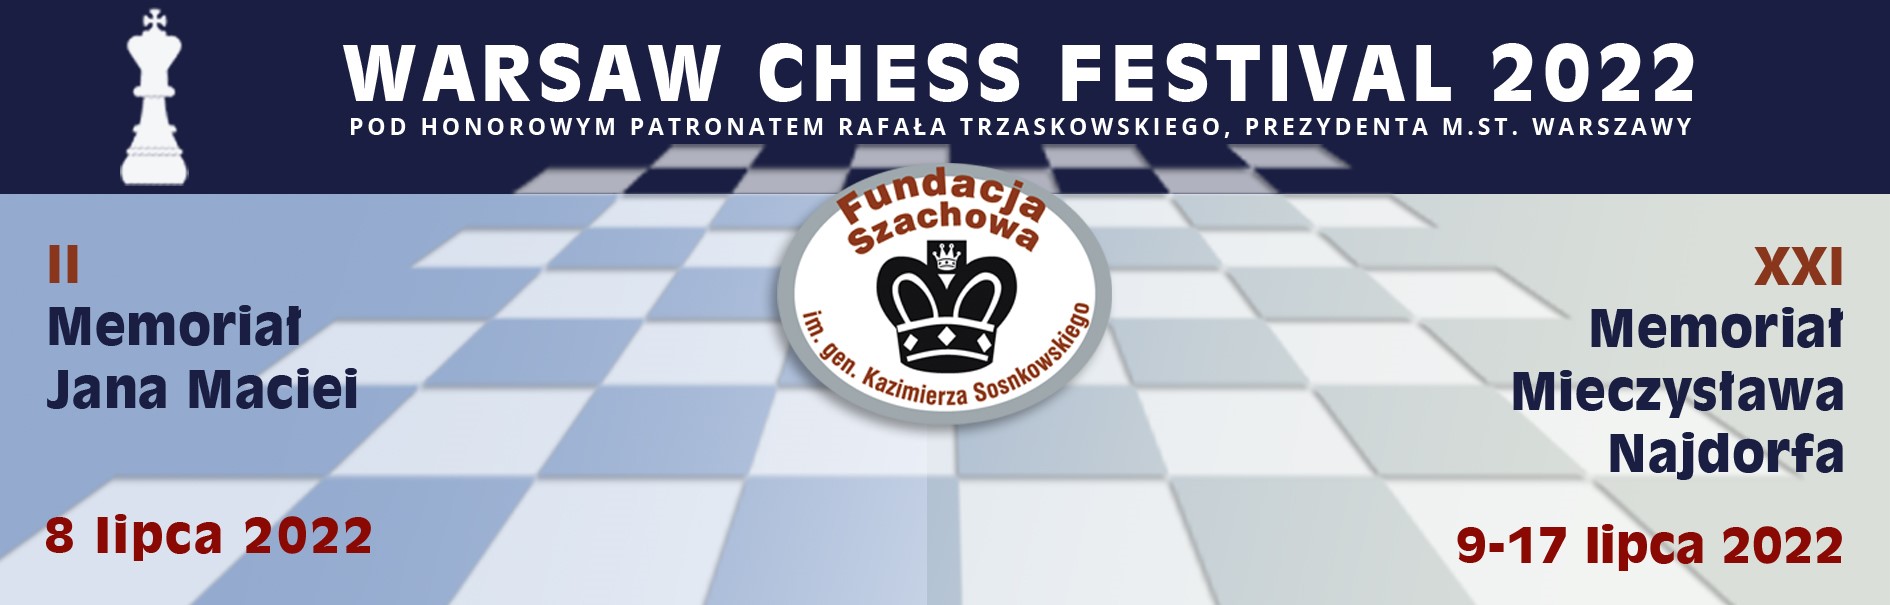 warsaw_chess_festival-2022 (1)